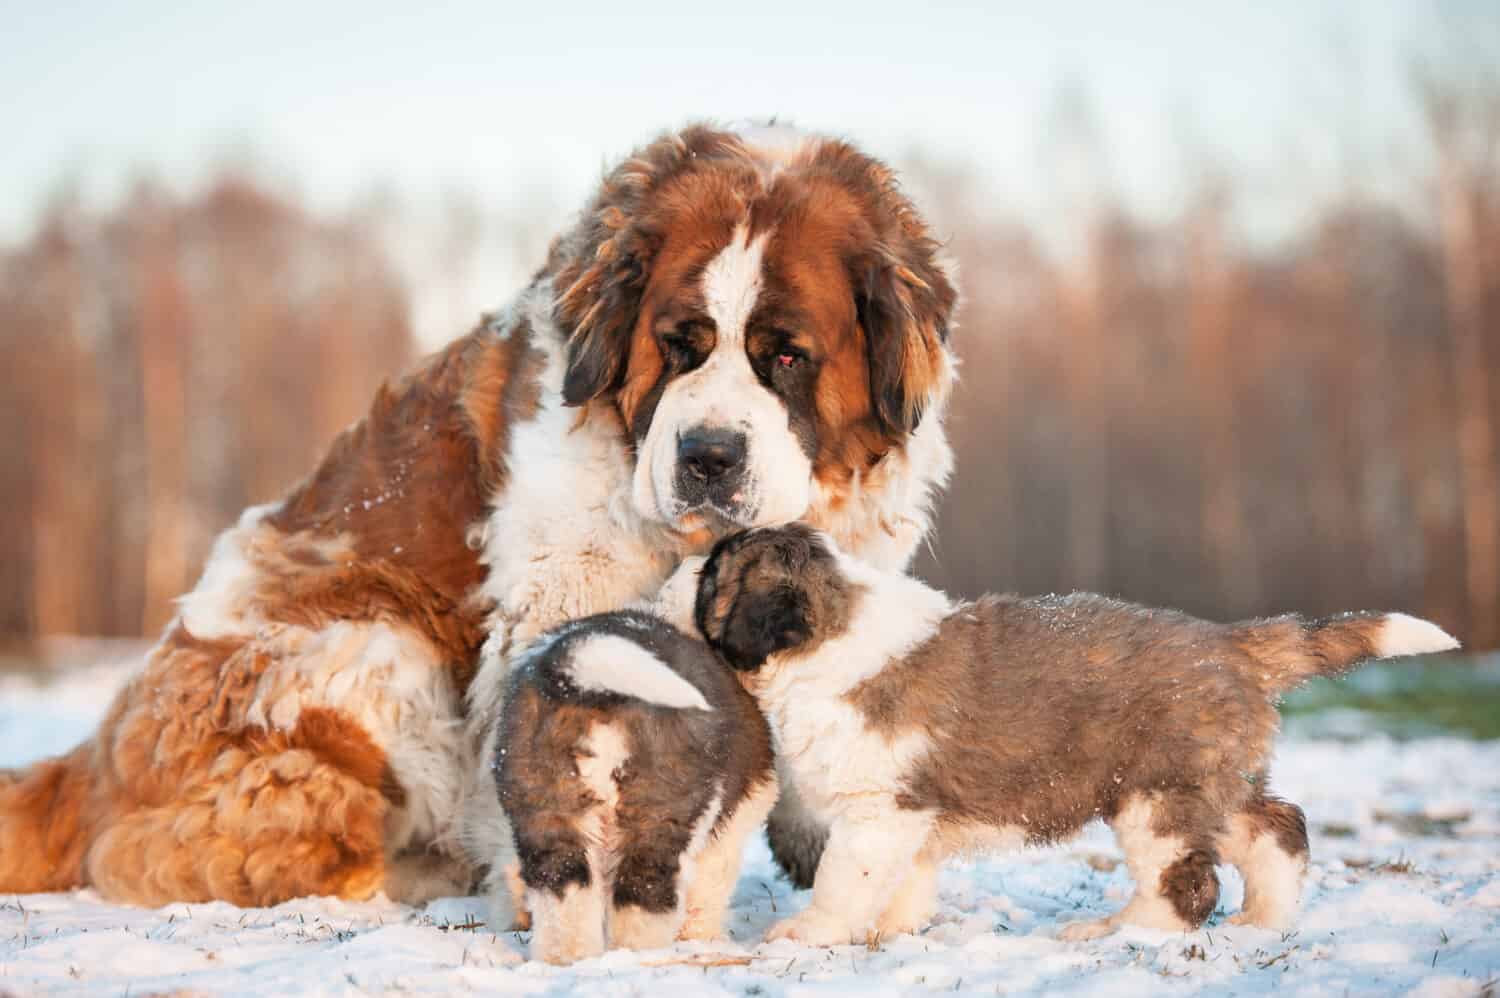 Saint bernard dog with puppies in winter